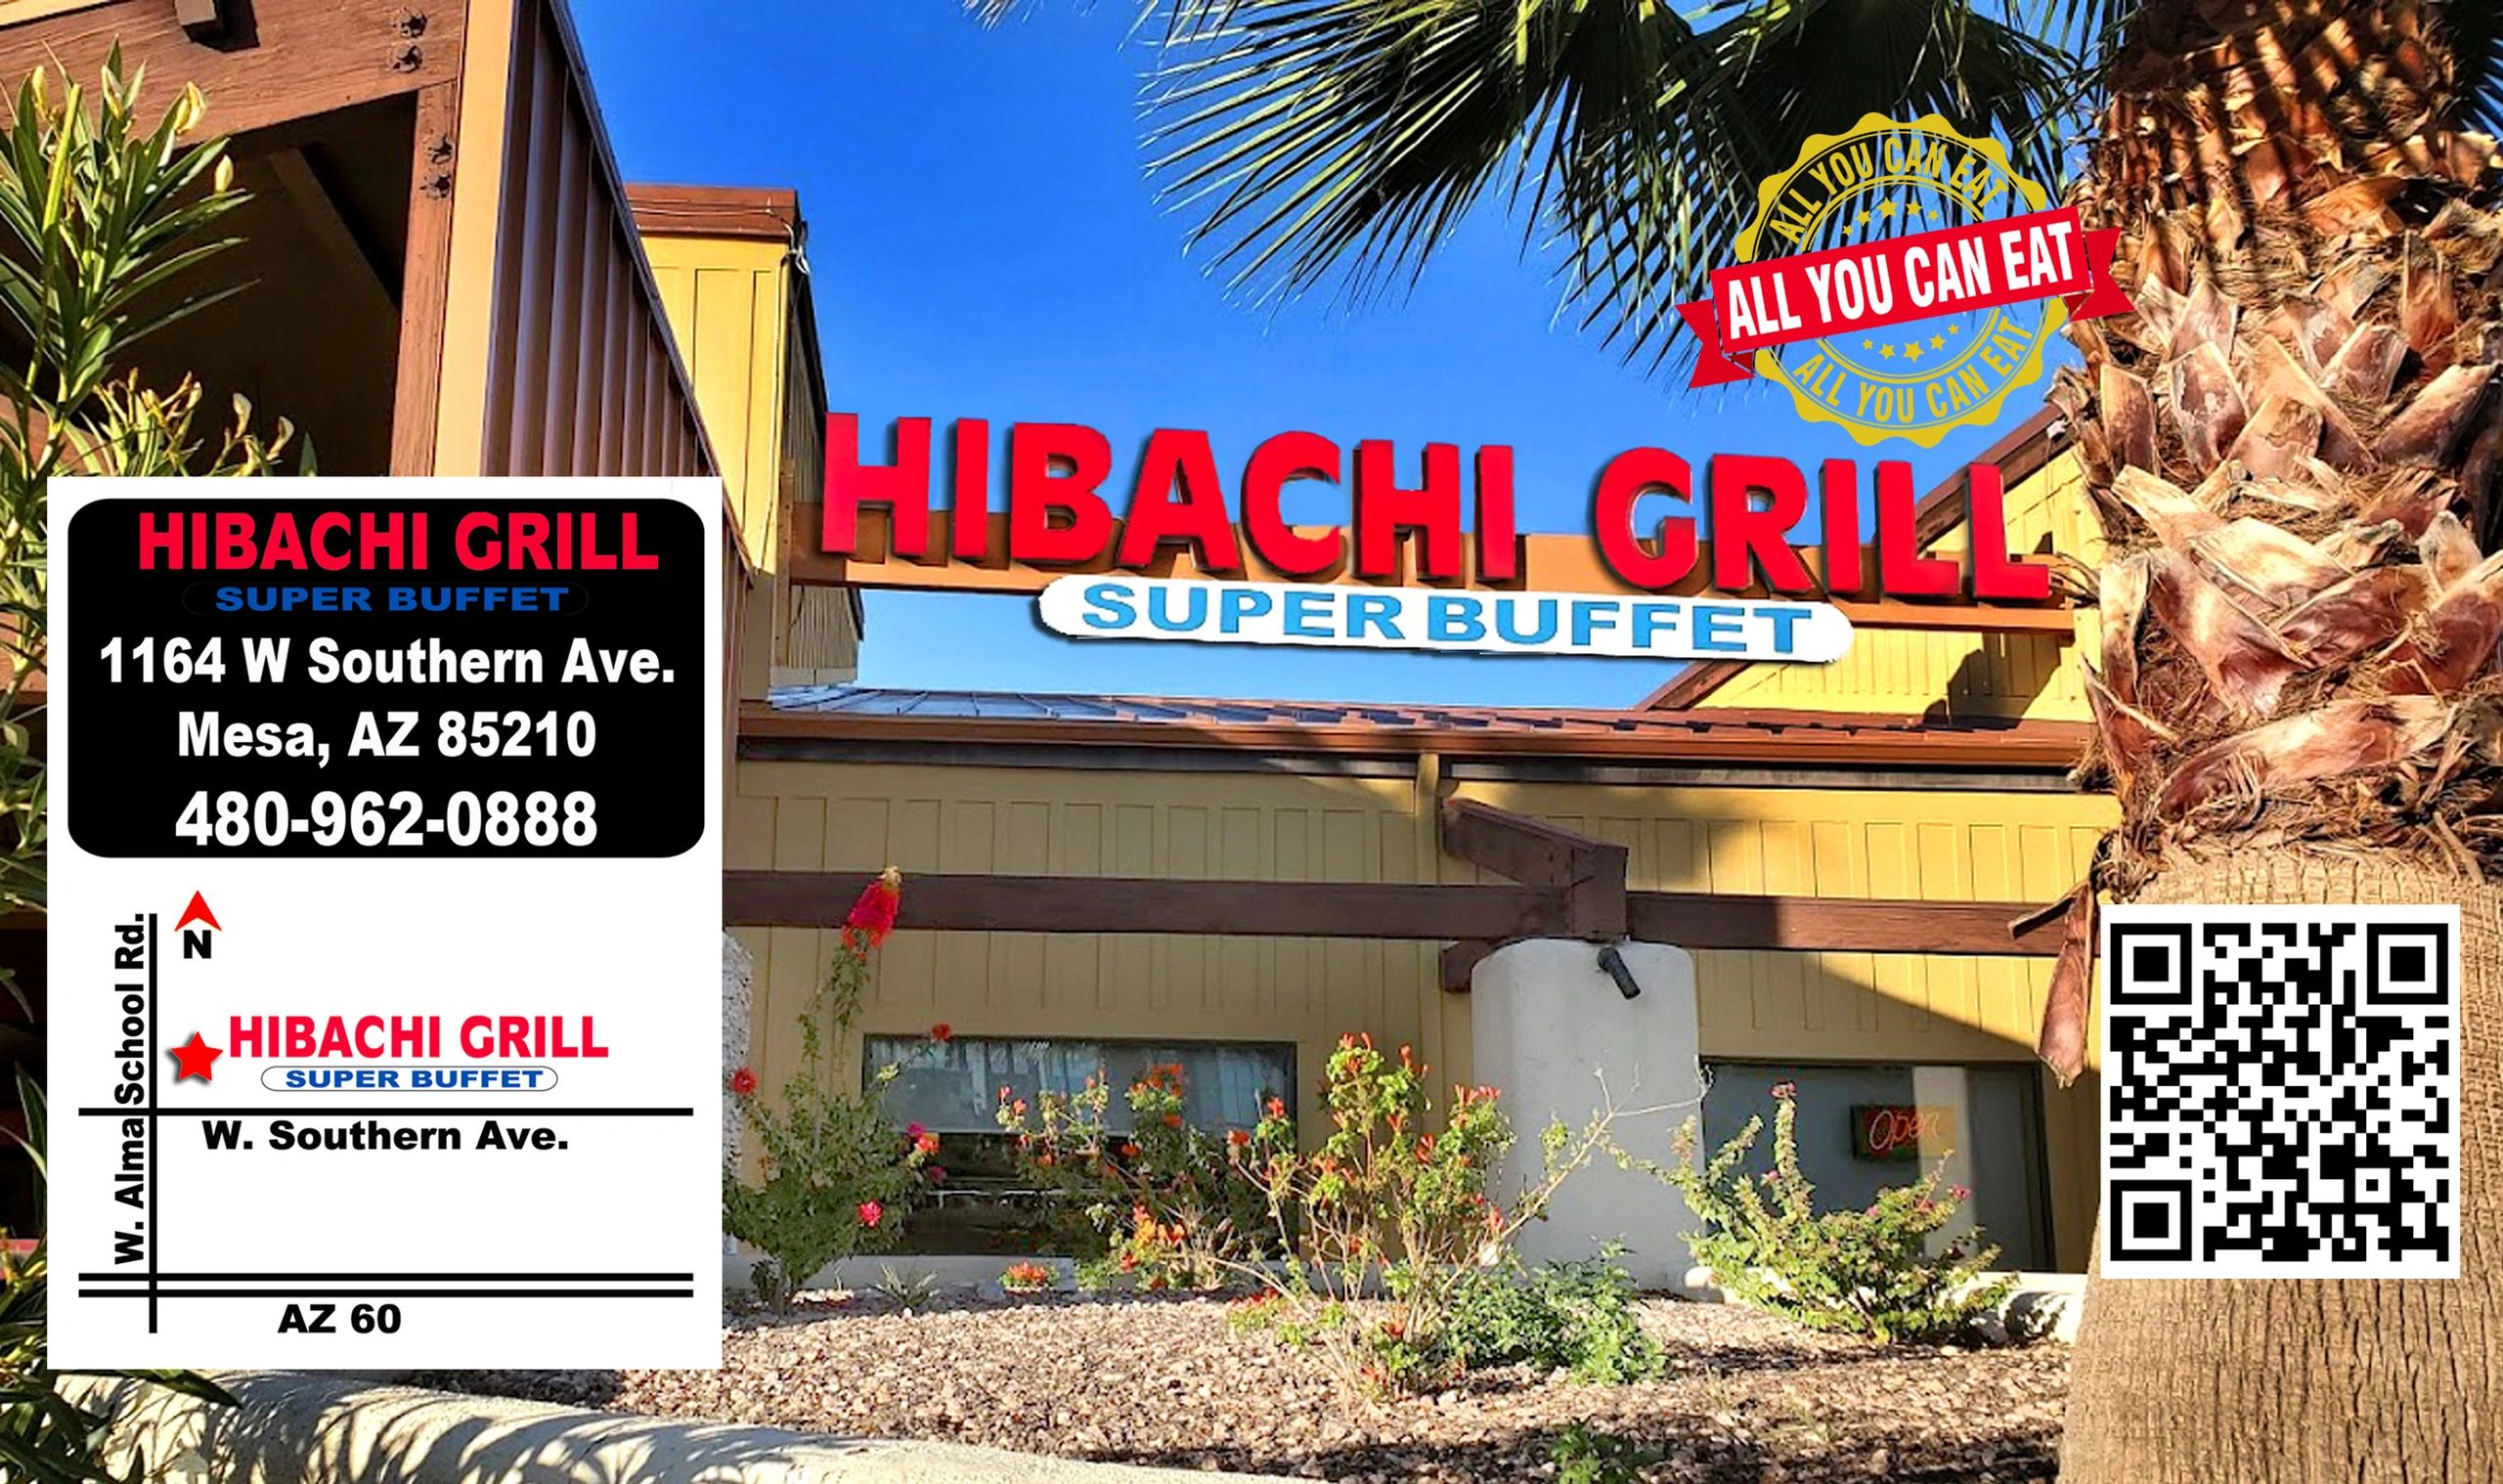 All You Can Eat Buffet - Hibachi Grill Super Buffet - Mesa, Arizona